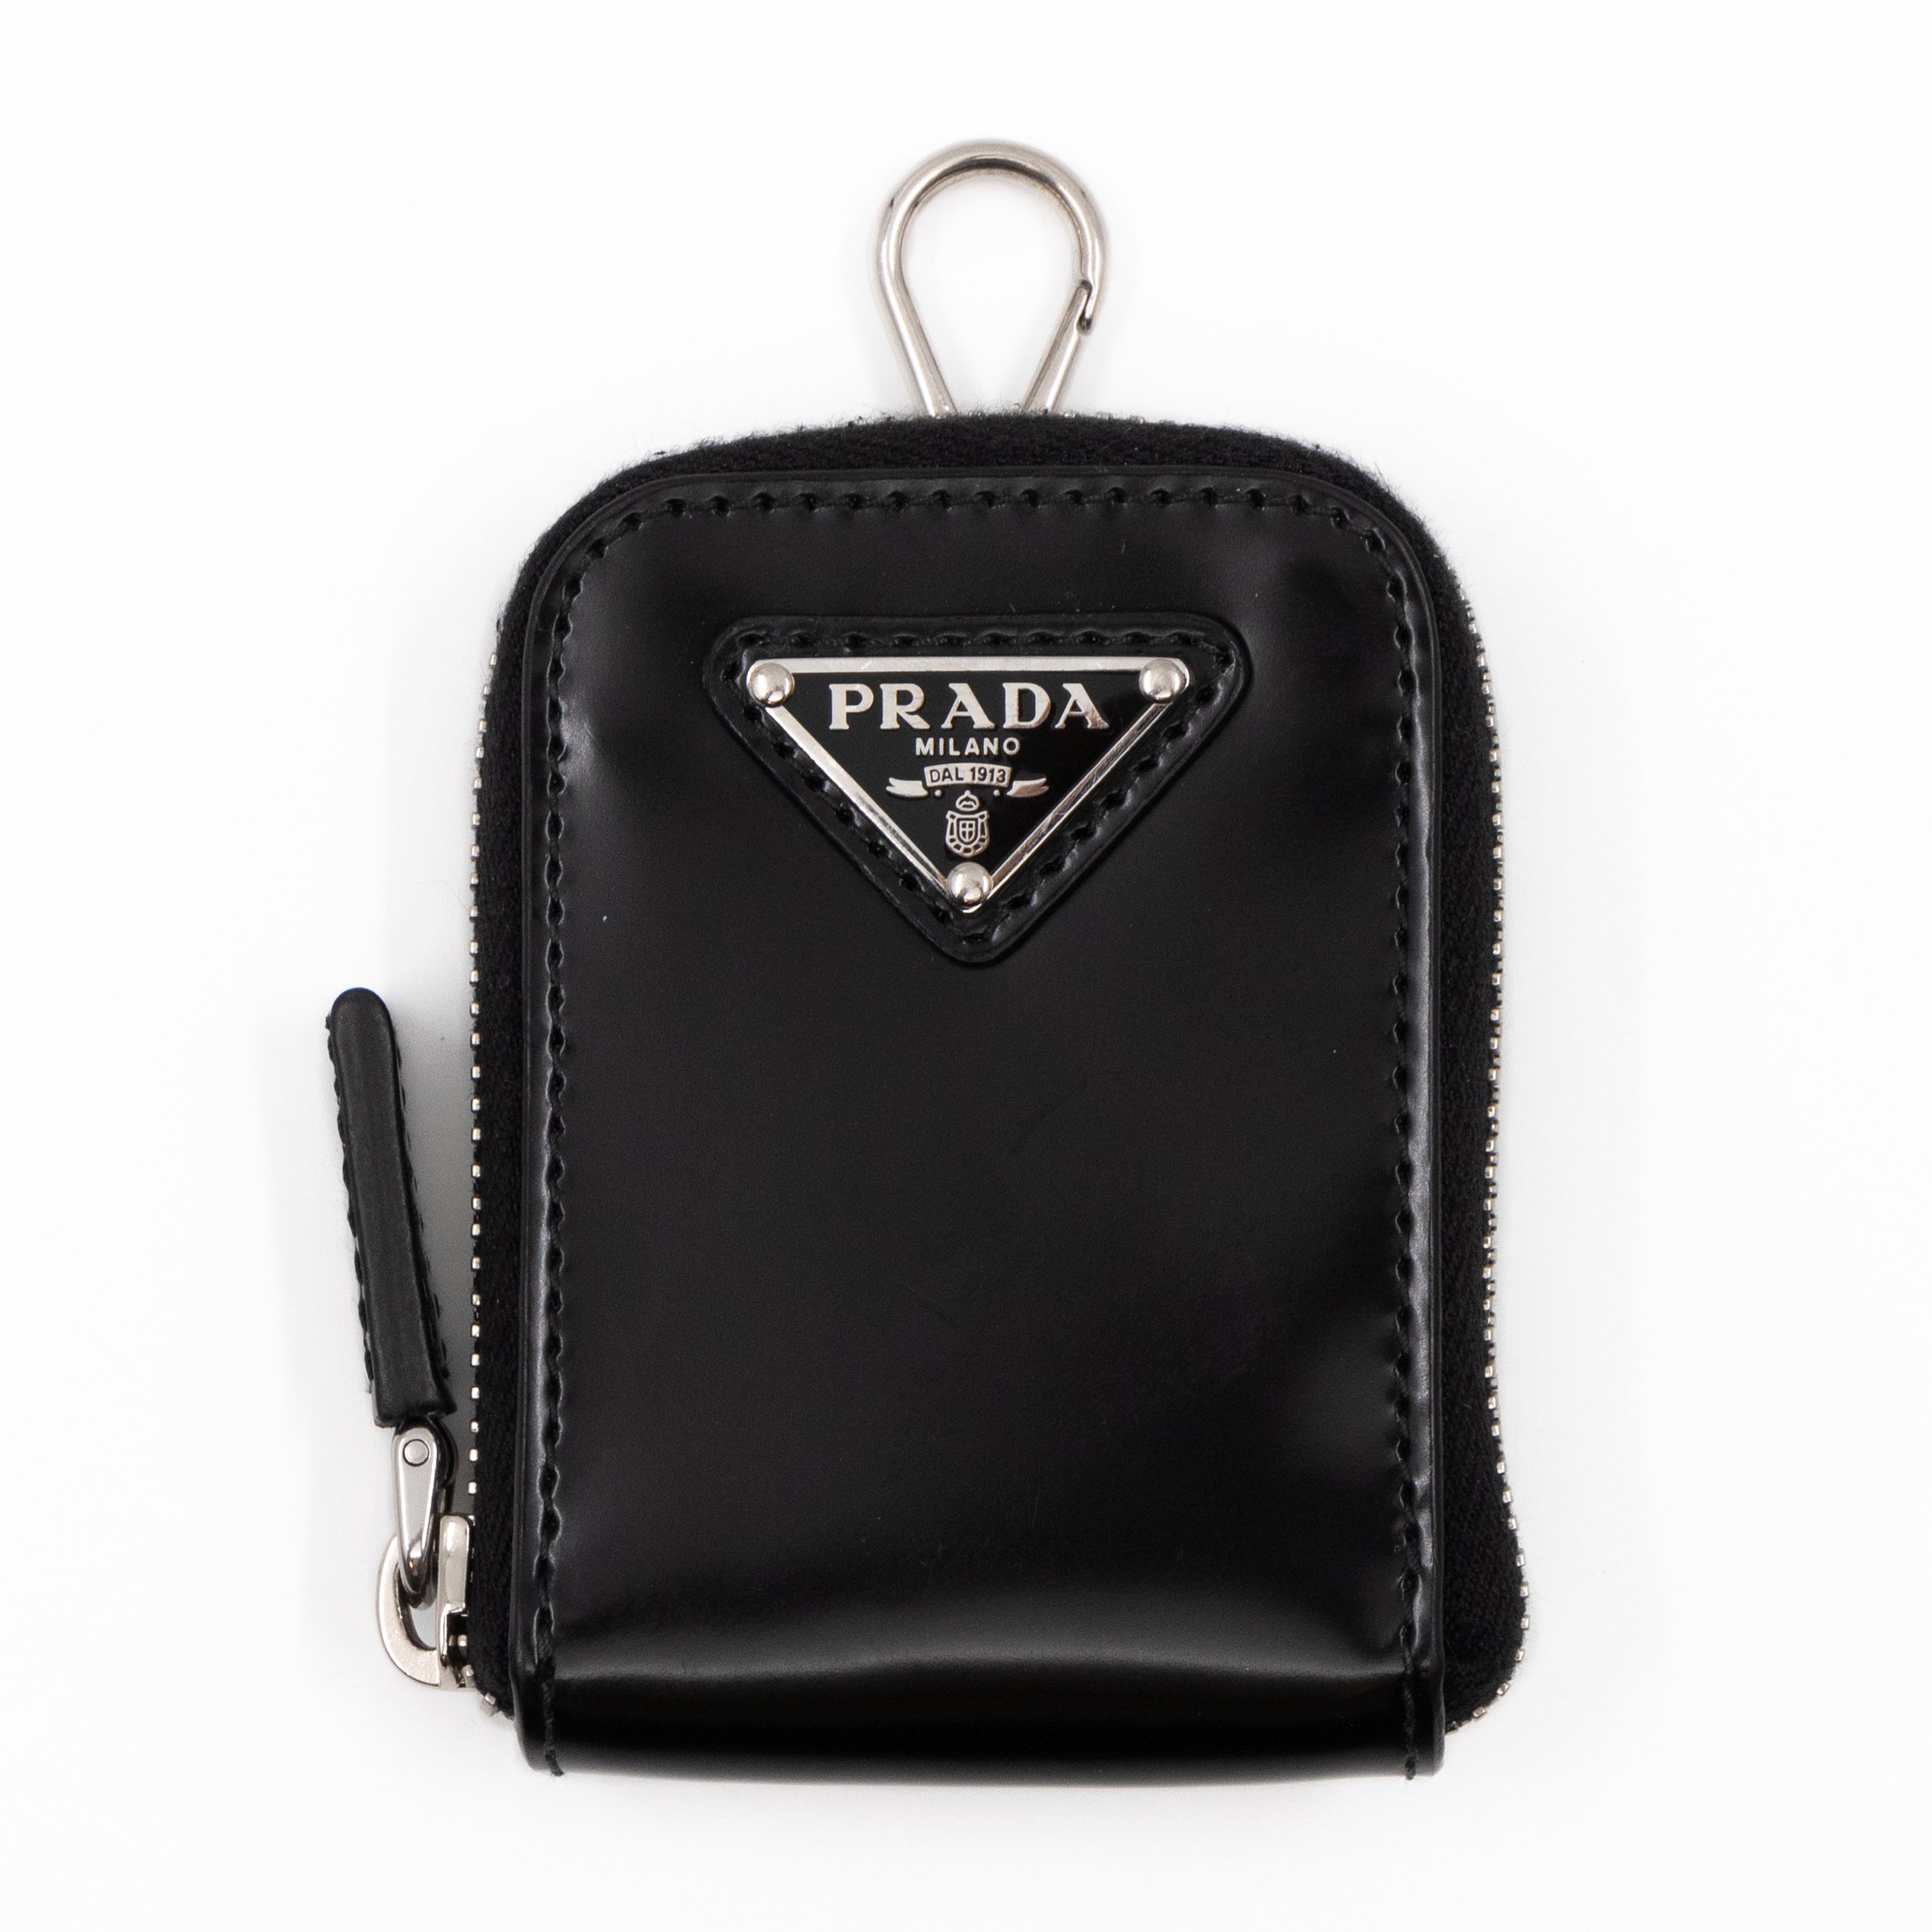 Prada Coin Purse | Coin purse, Purses, Leather wallet